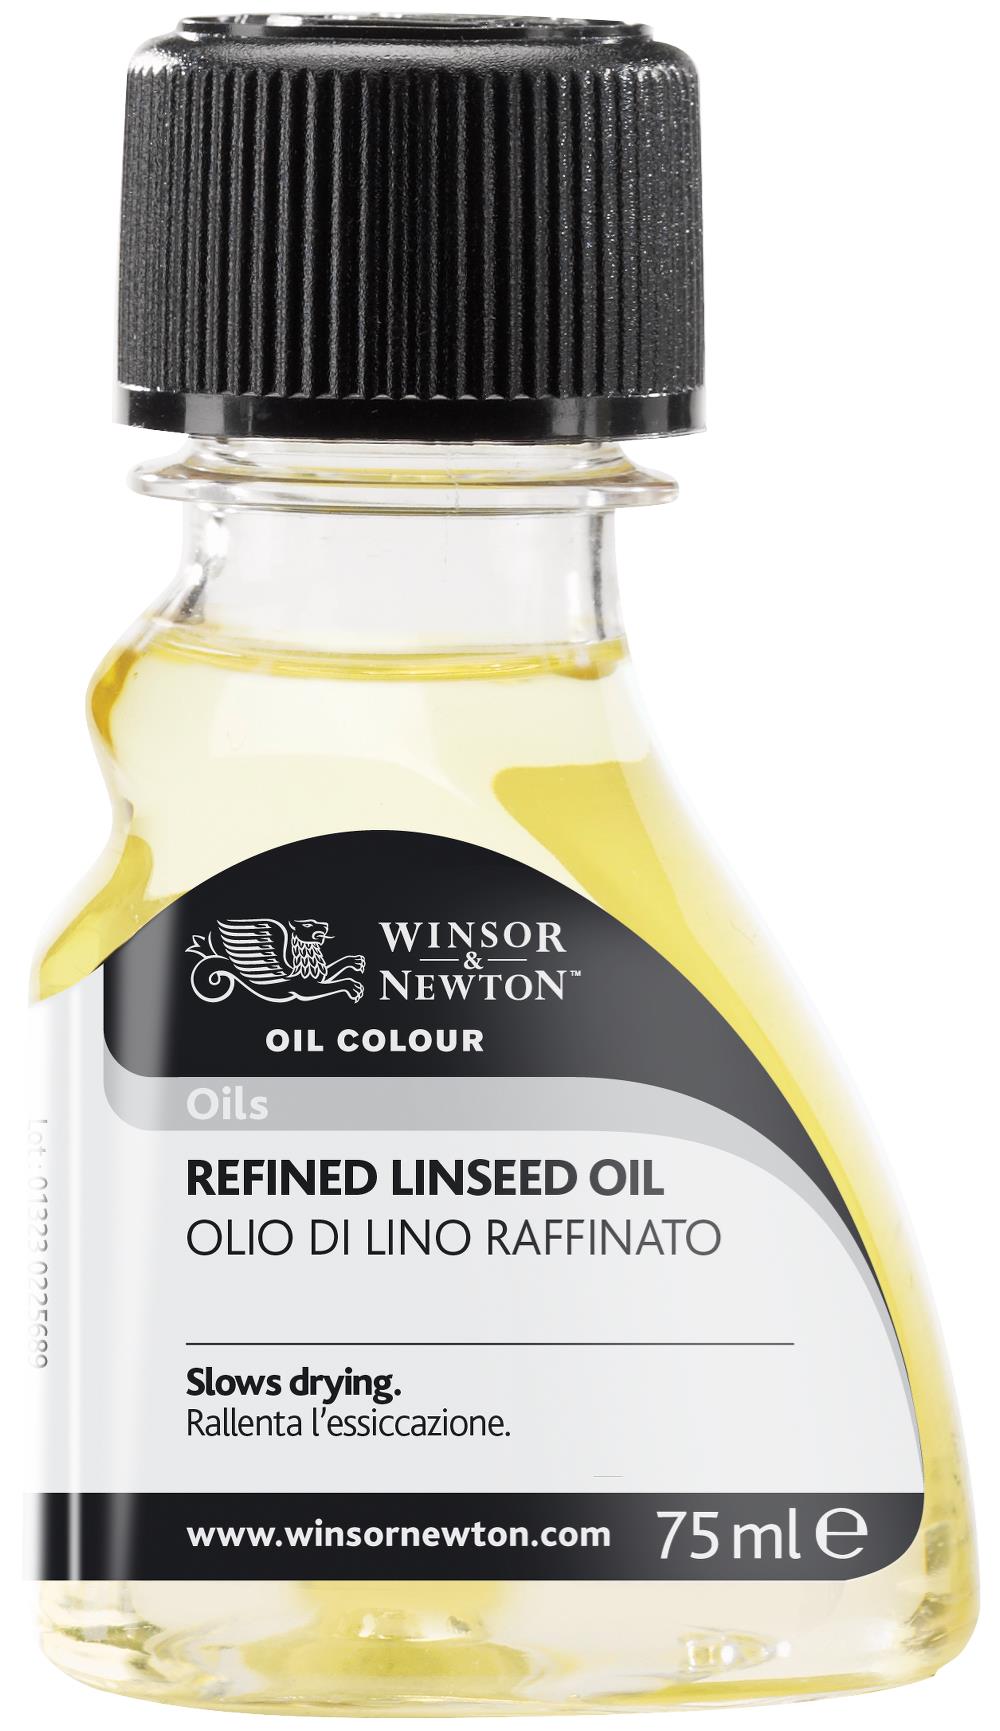 Winsor & Newton Rifined Linseed oil 75 mls